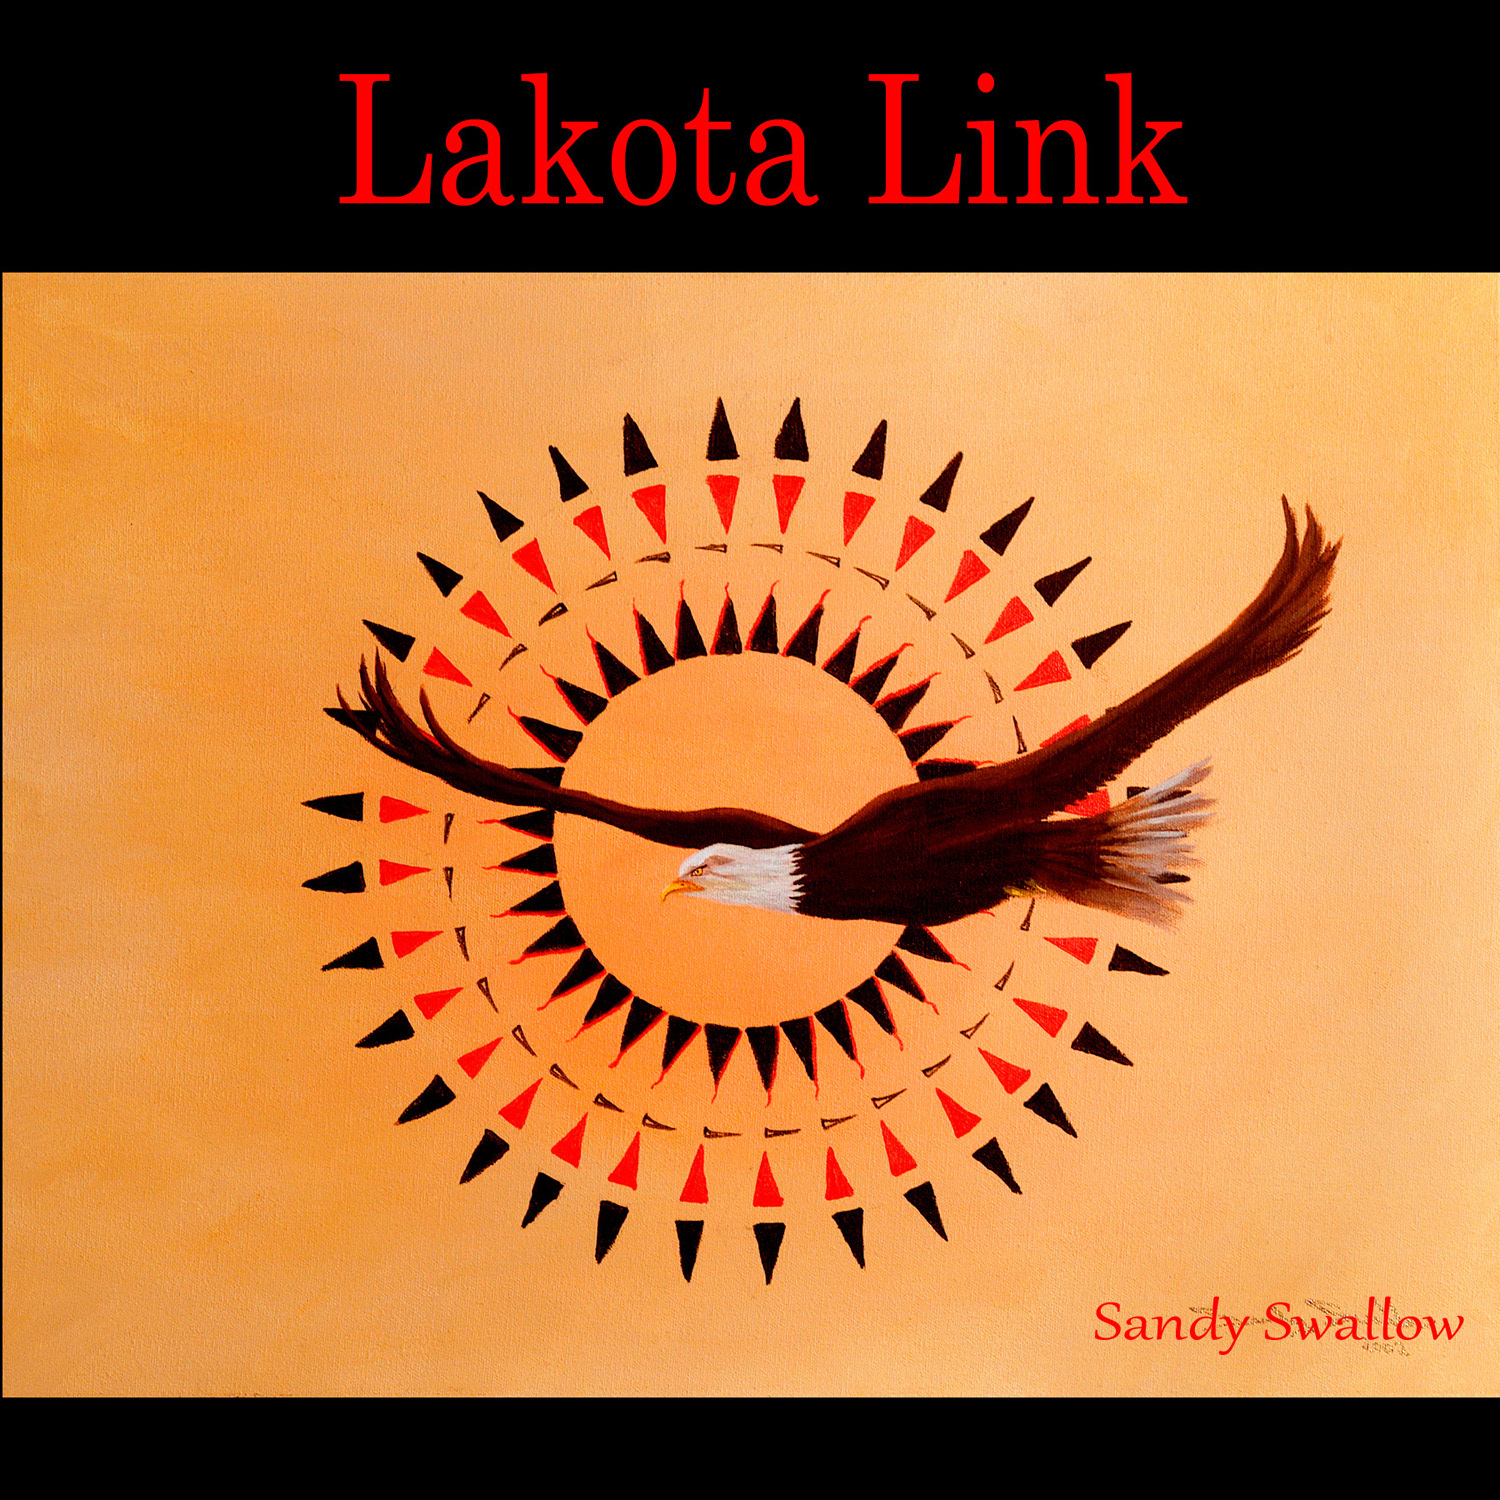 Lakota Link